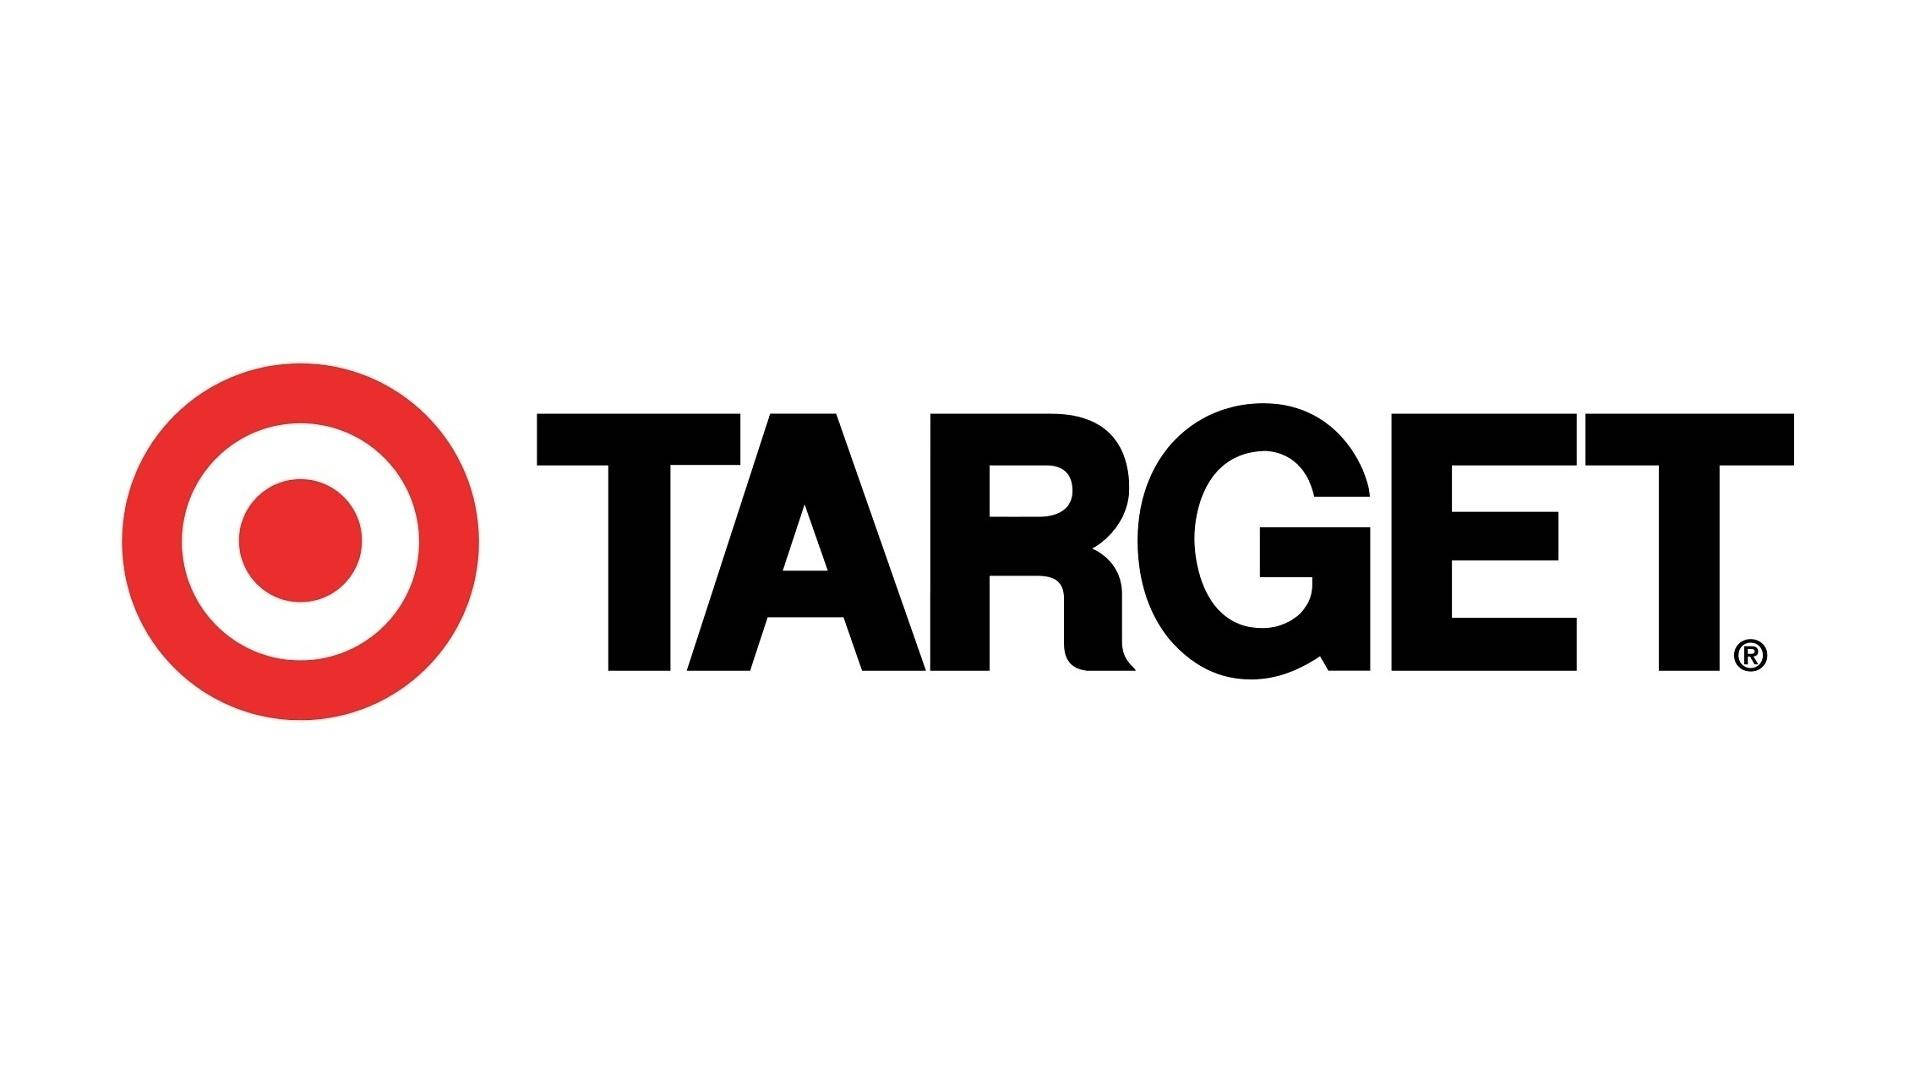 Classic Target Logo Background